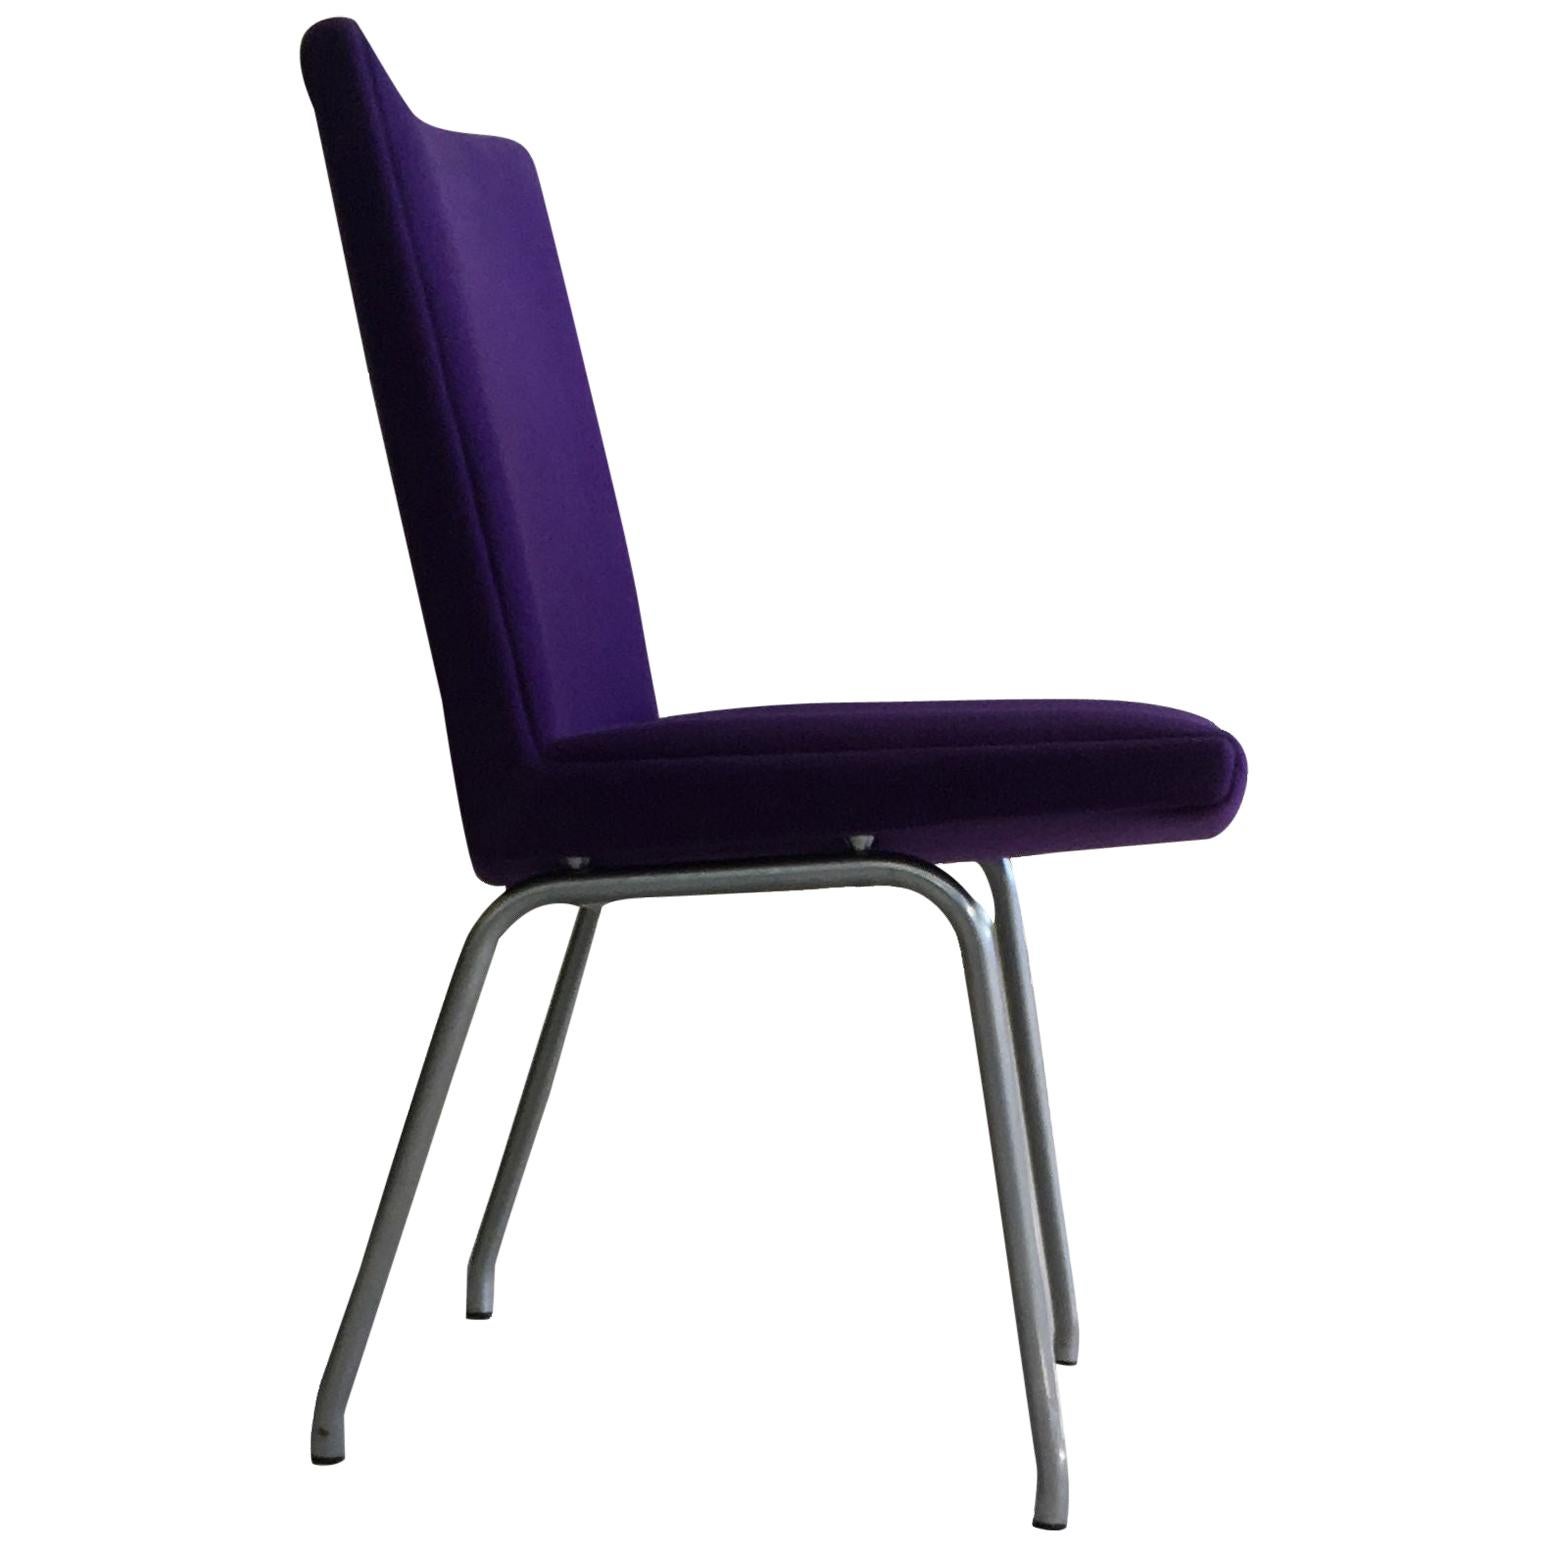 1960s Danish Hans J. Wegner Airport Chair, Reupholstered in Purple Fabric